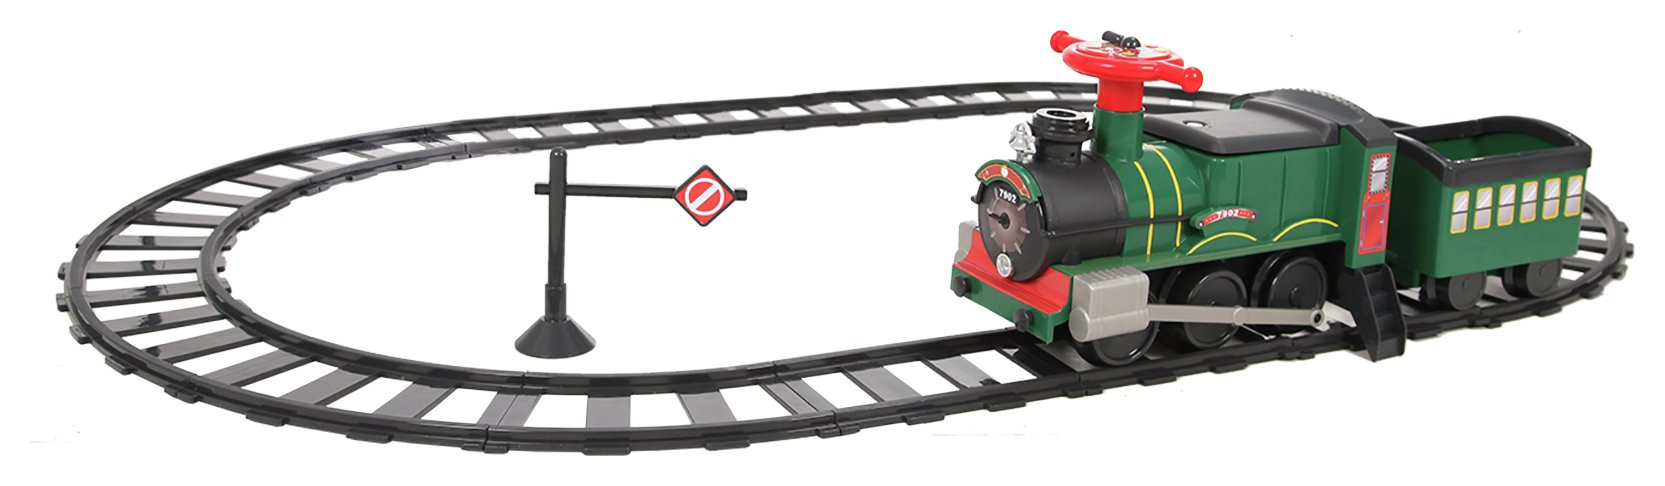 train tracks toys electric